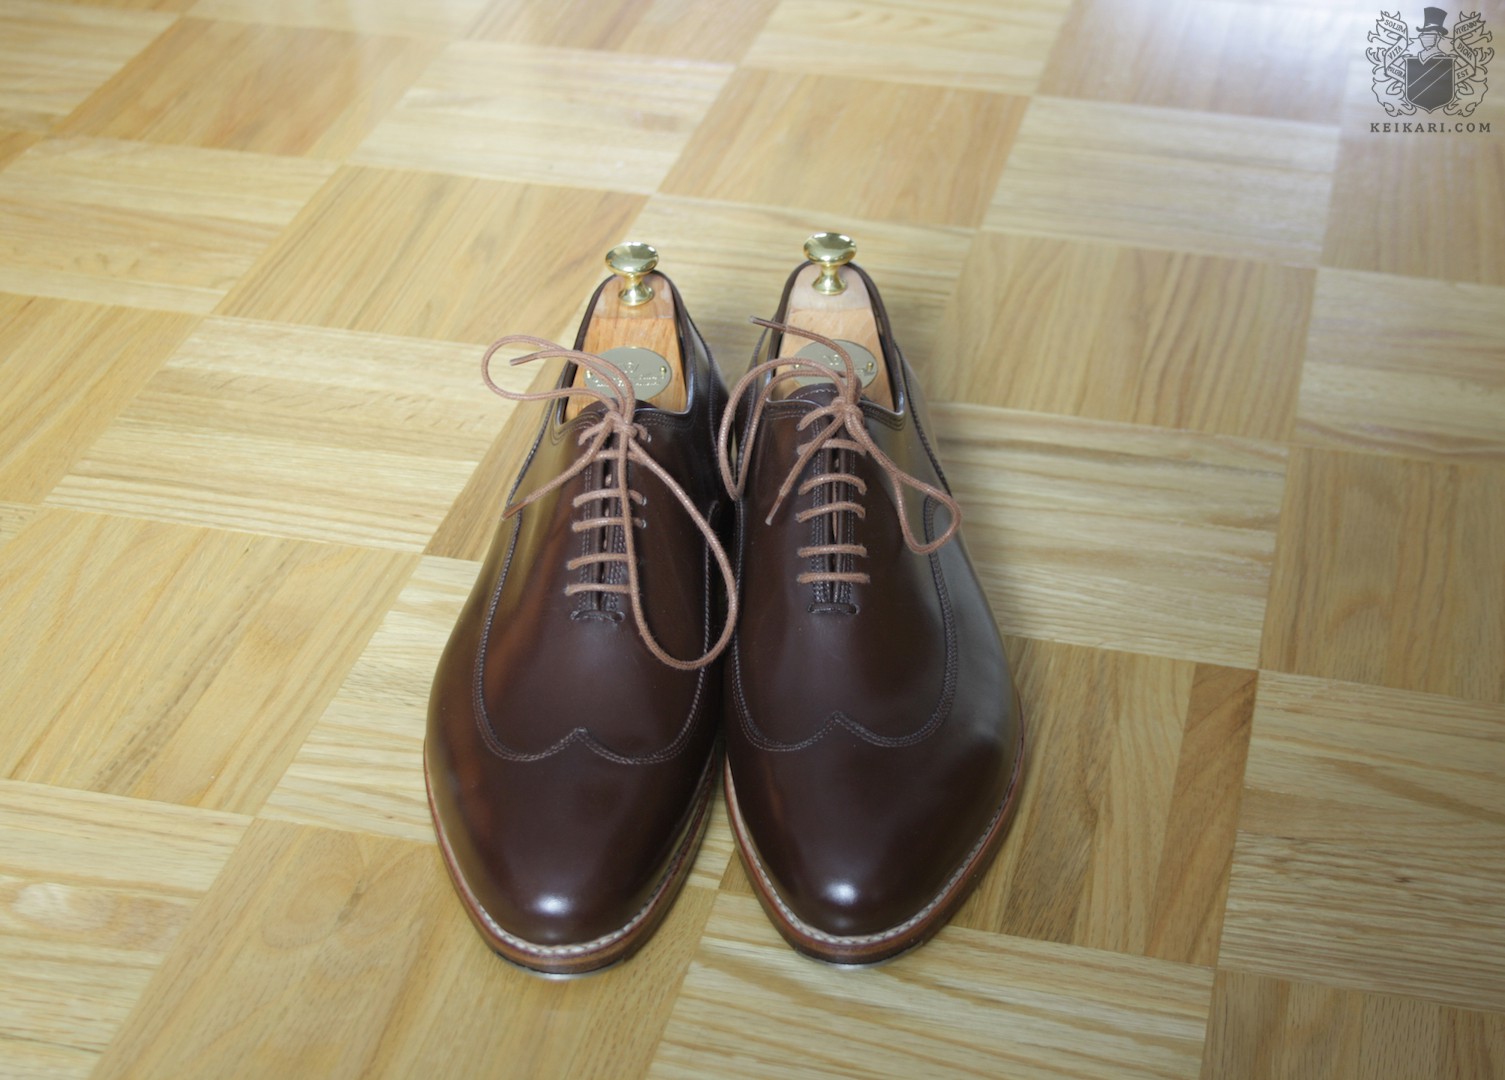 Buday_made_to_measure_shoes_at_Keikari_dot_com02